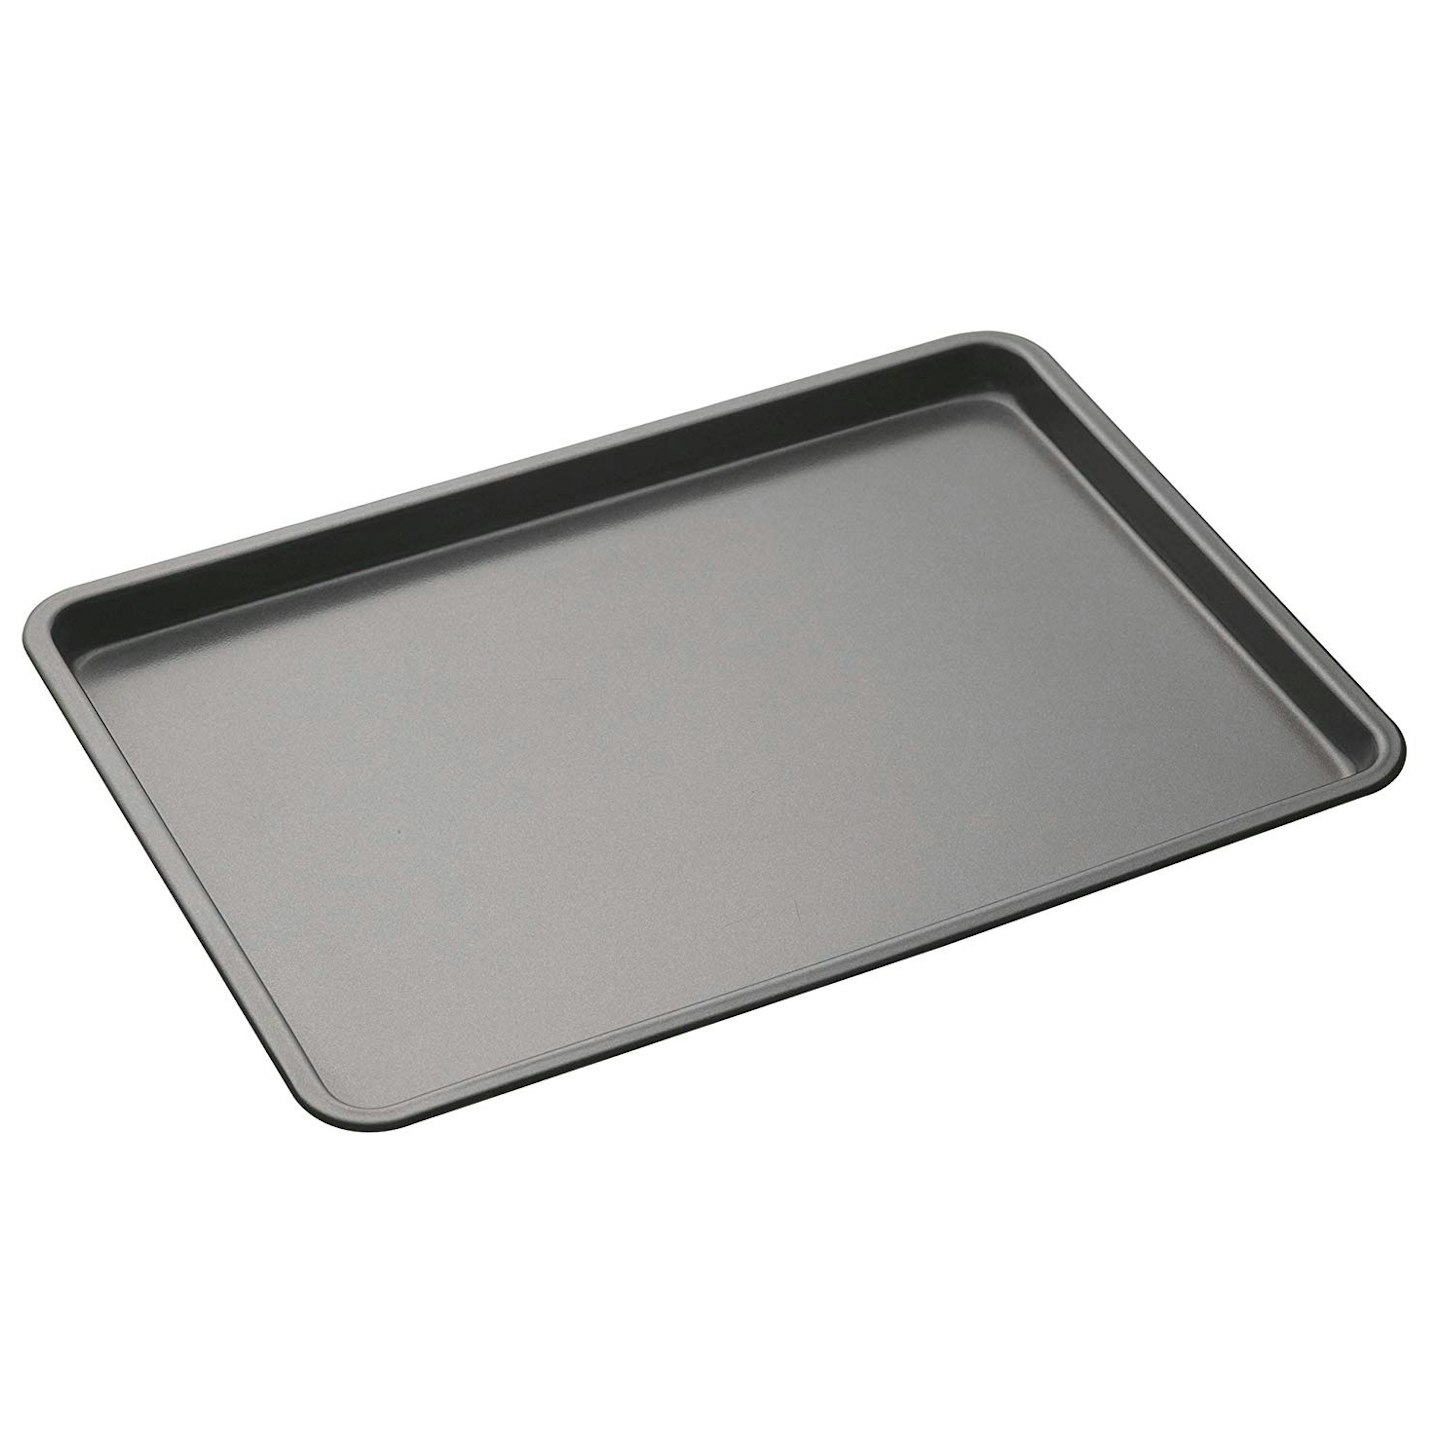 KitchenCraft MasterClass Non-Stick Baking Tray